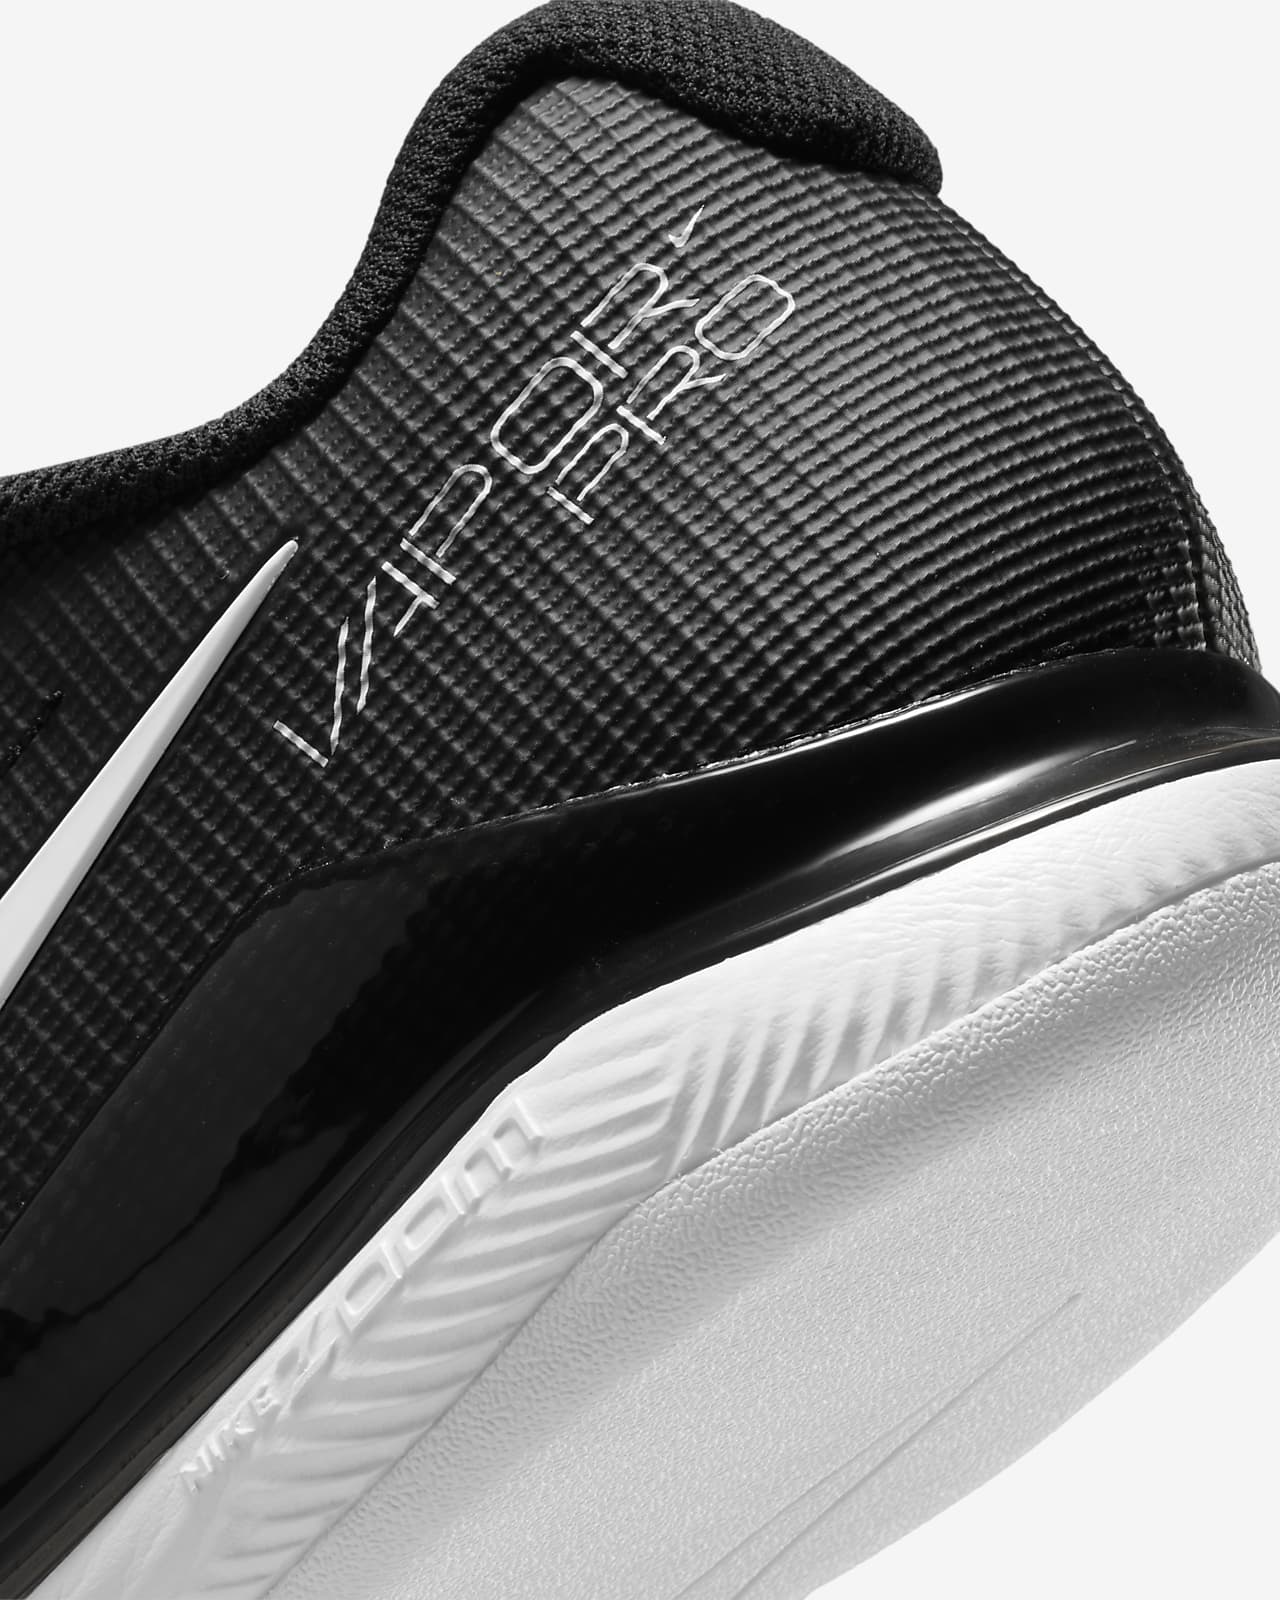 NikeCourt Air Vapor Men's Carpet Tennis Shoes. Nike RO